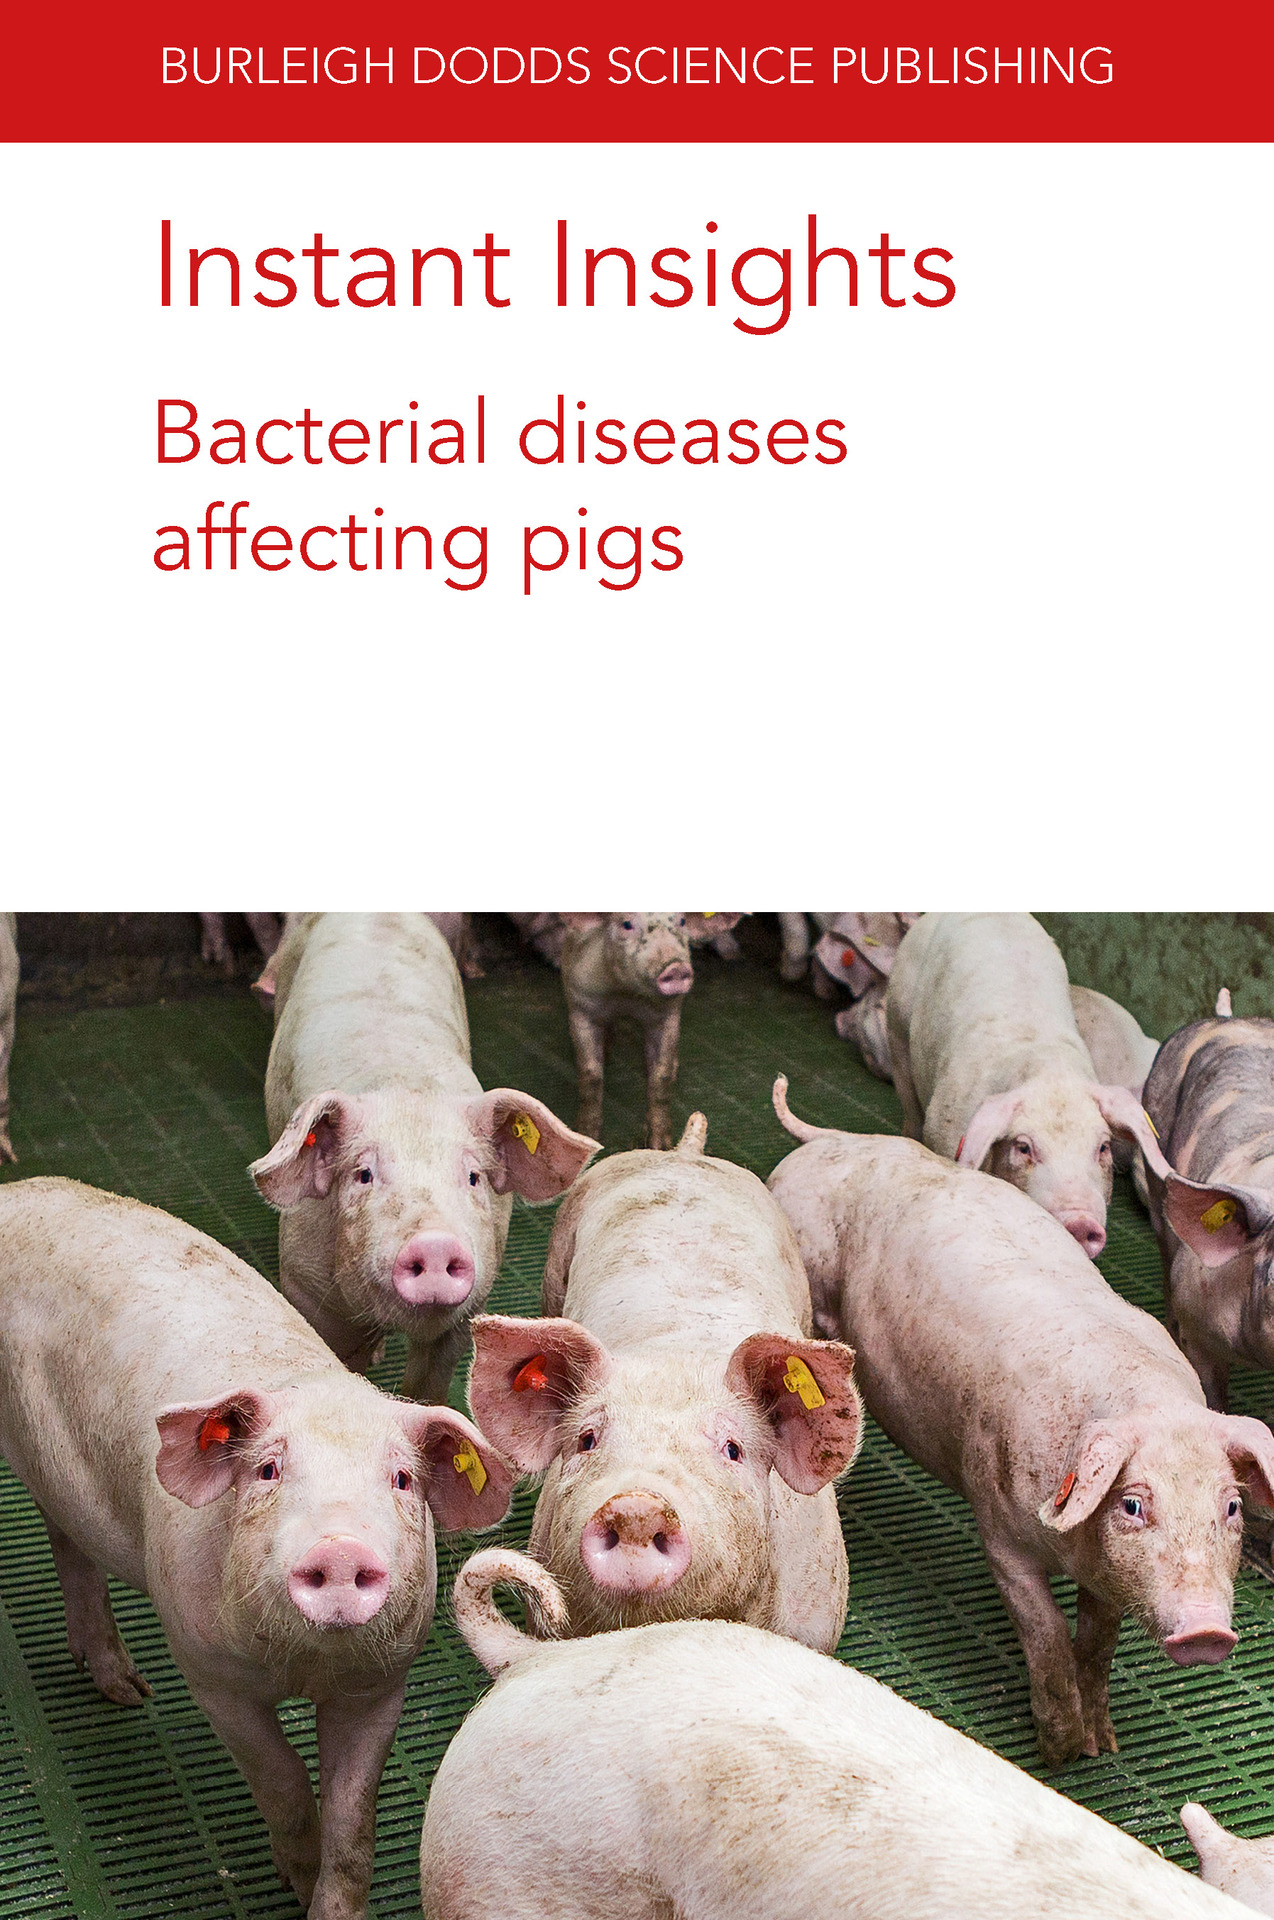 Bacterial diseases affecting pigs